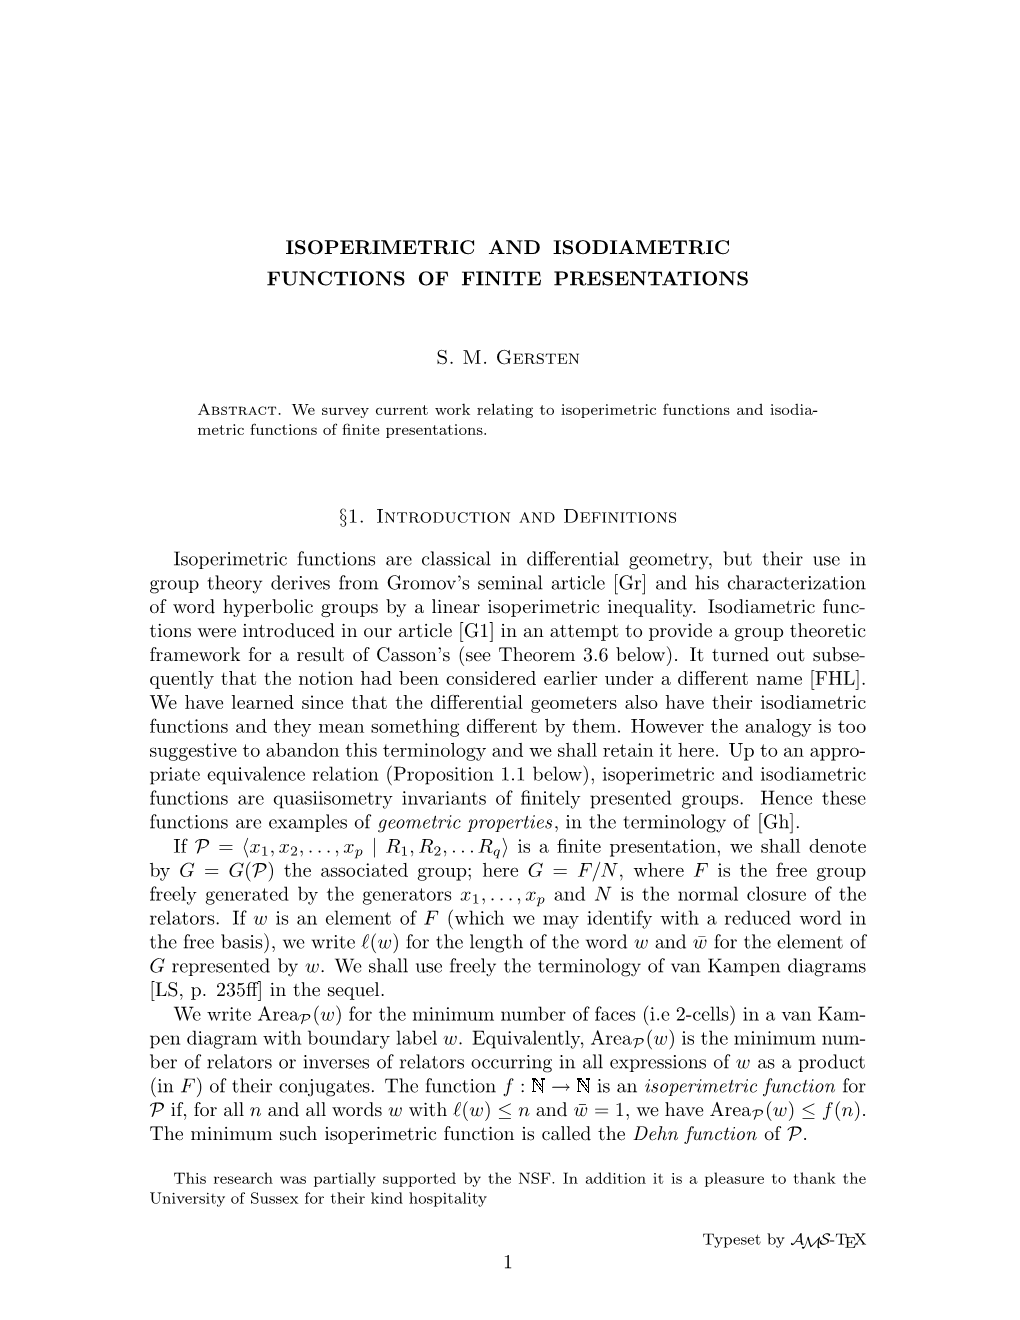 Isoperimetric and Isodiametric Functions of Finite Presentations